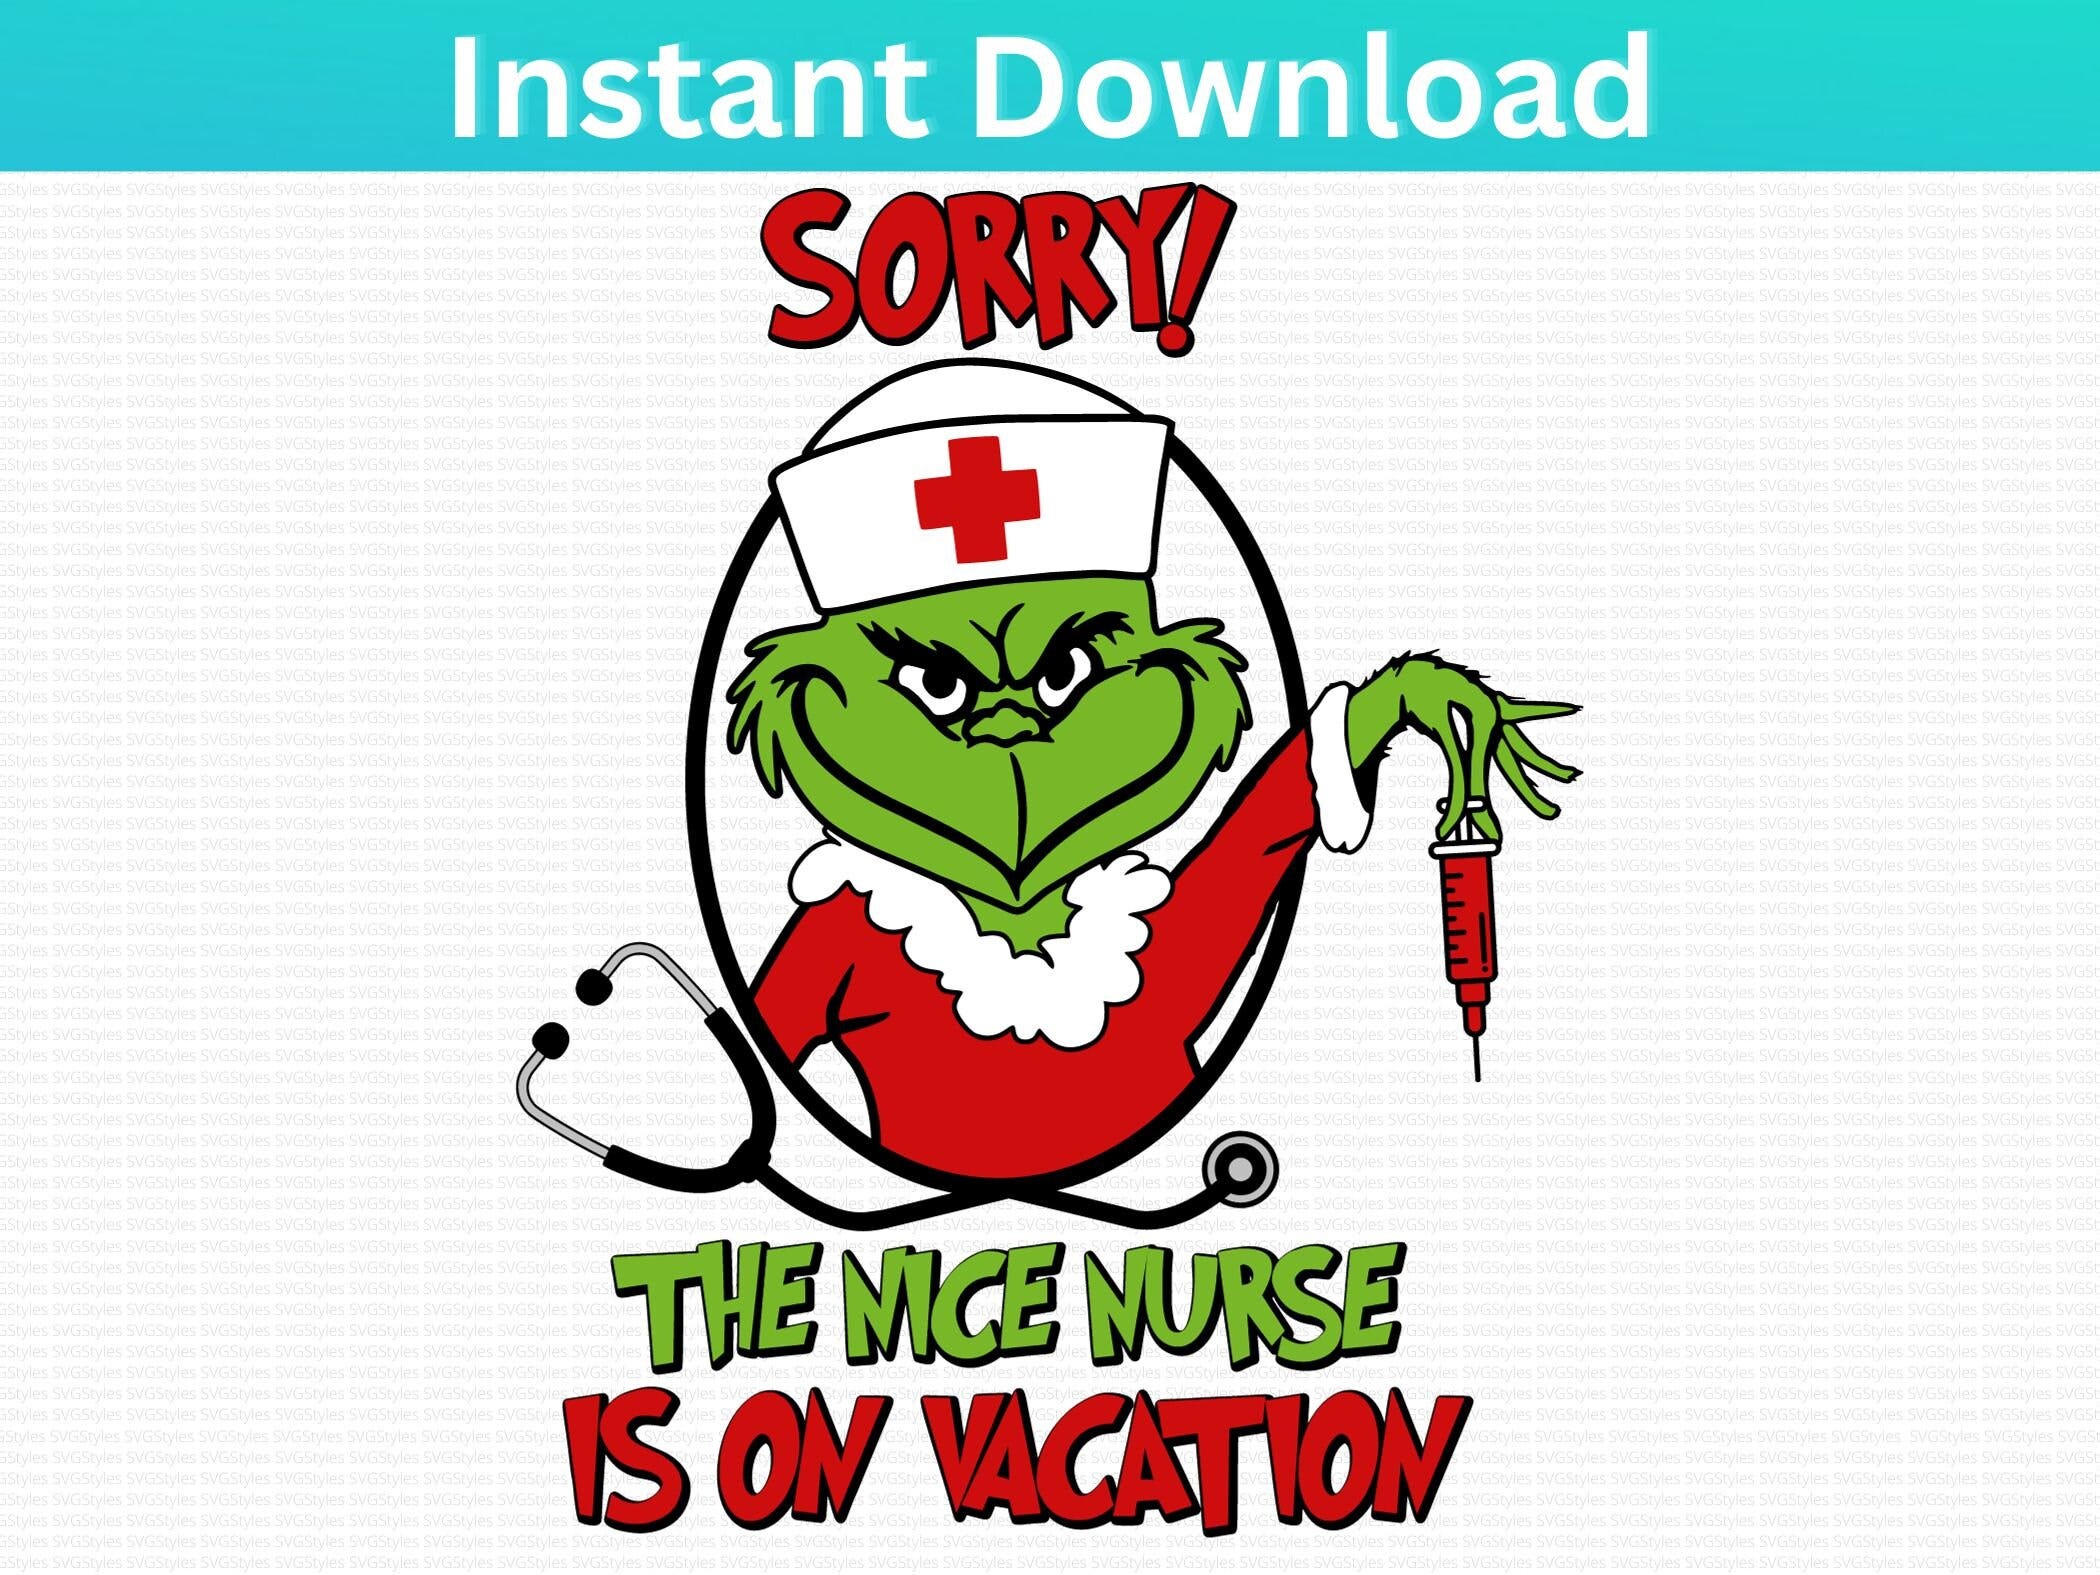 Nurse Christmas Shirt Svg Png Sorry The Nice Nurse Is On Vacation Christmas Sublimation Design RN LPN BSN Registered Nurse ed icu nicu peds